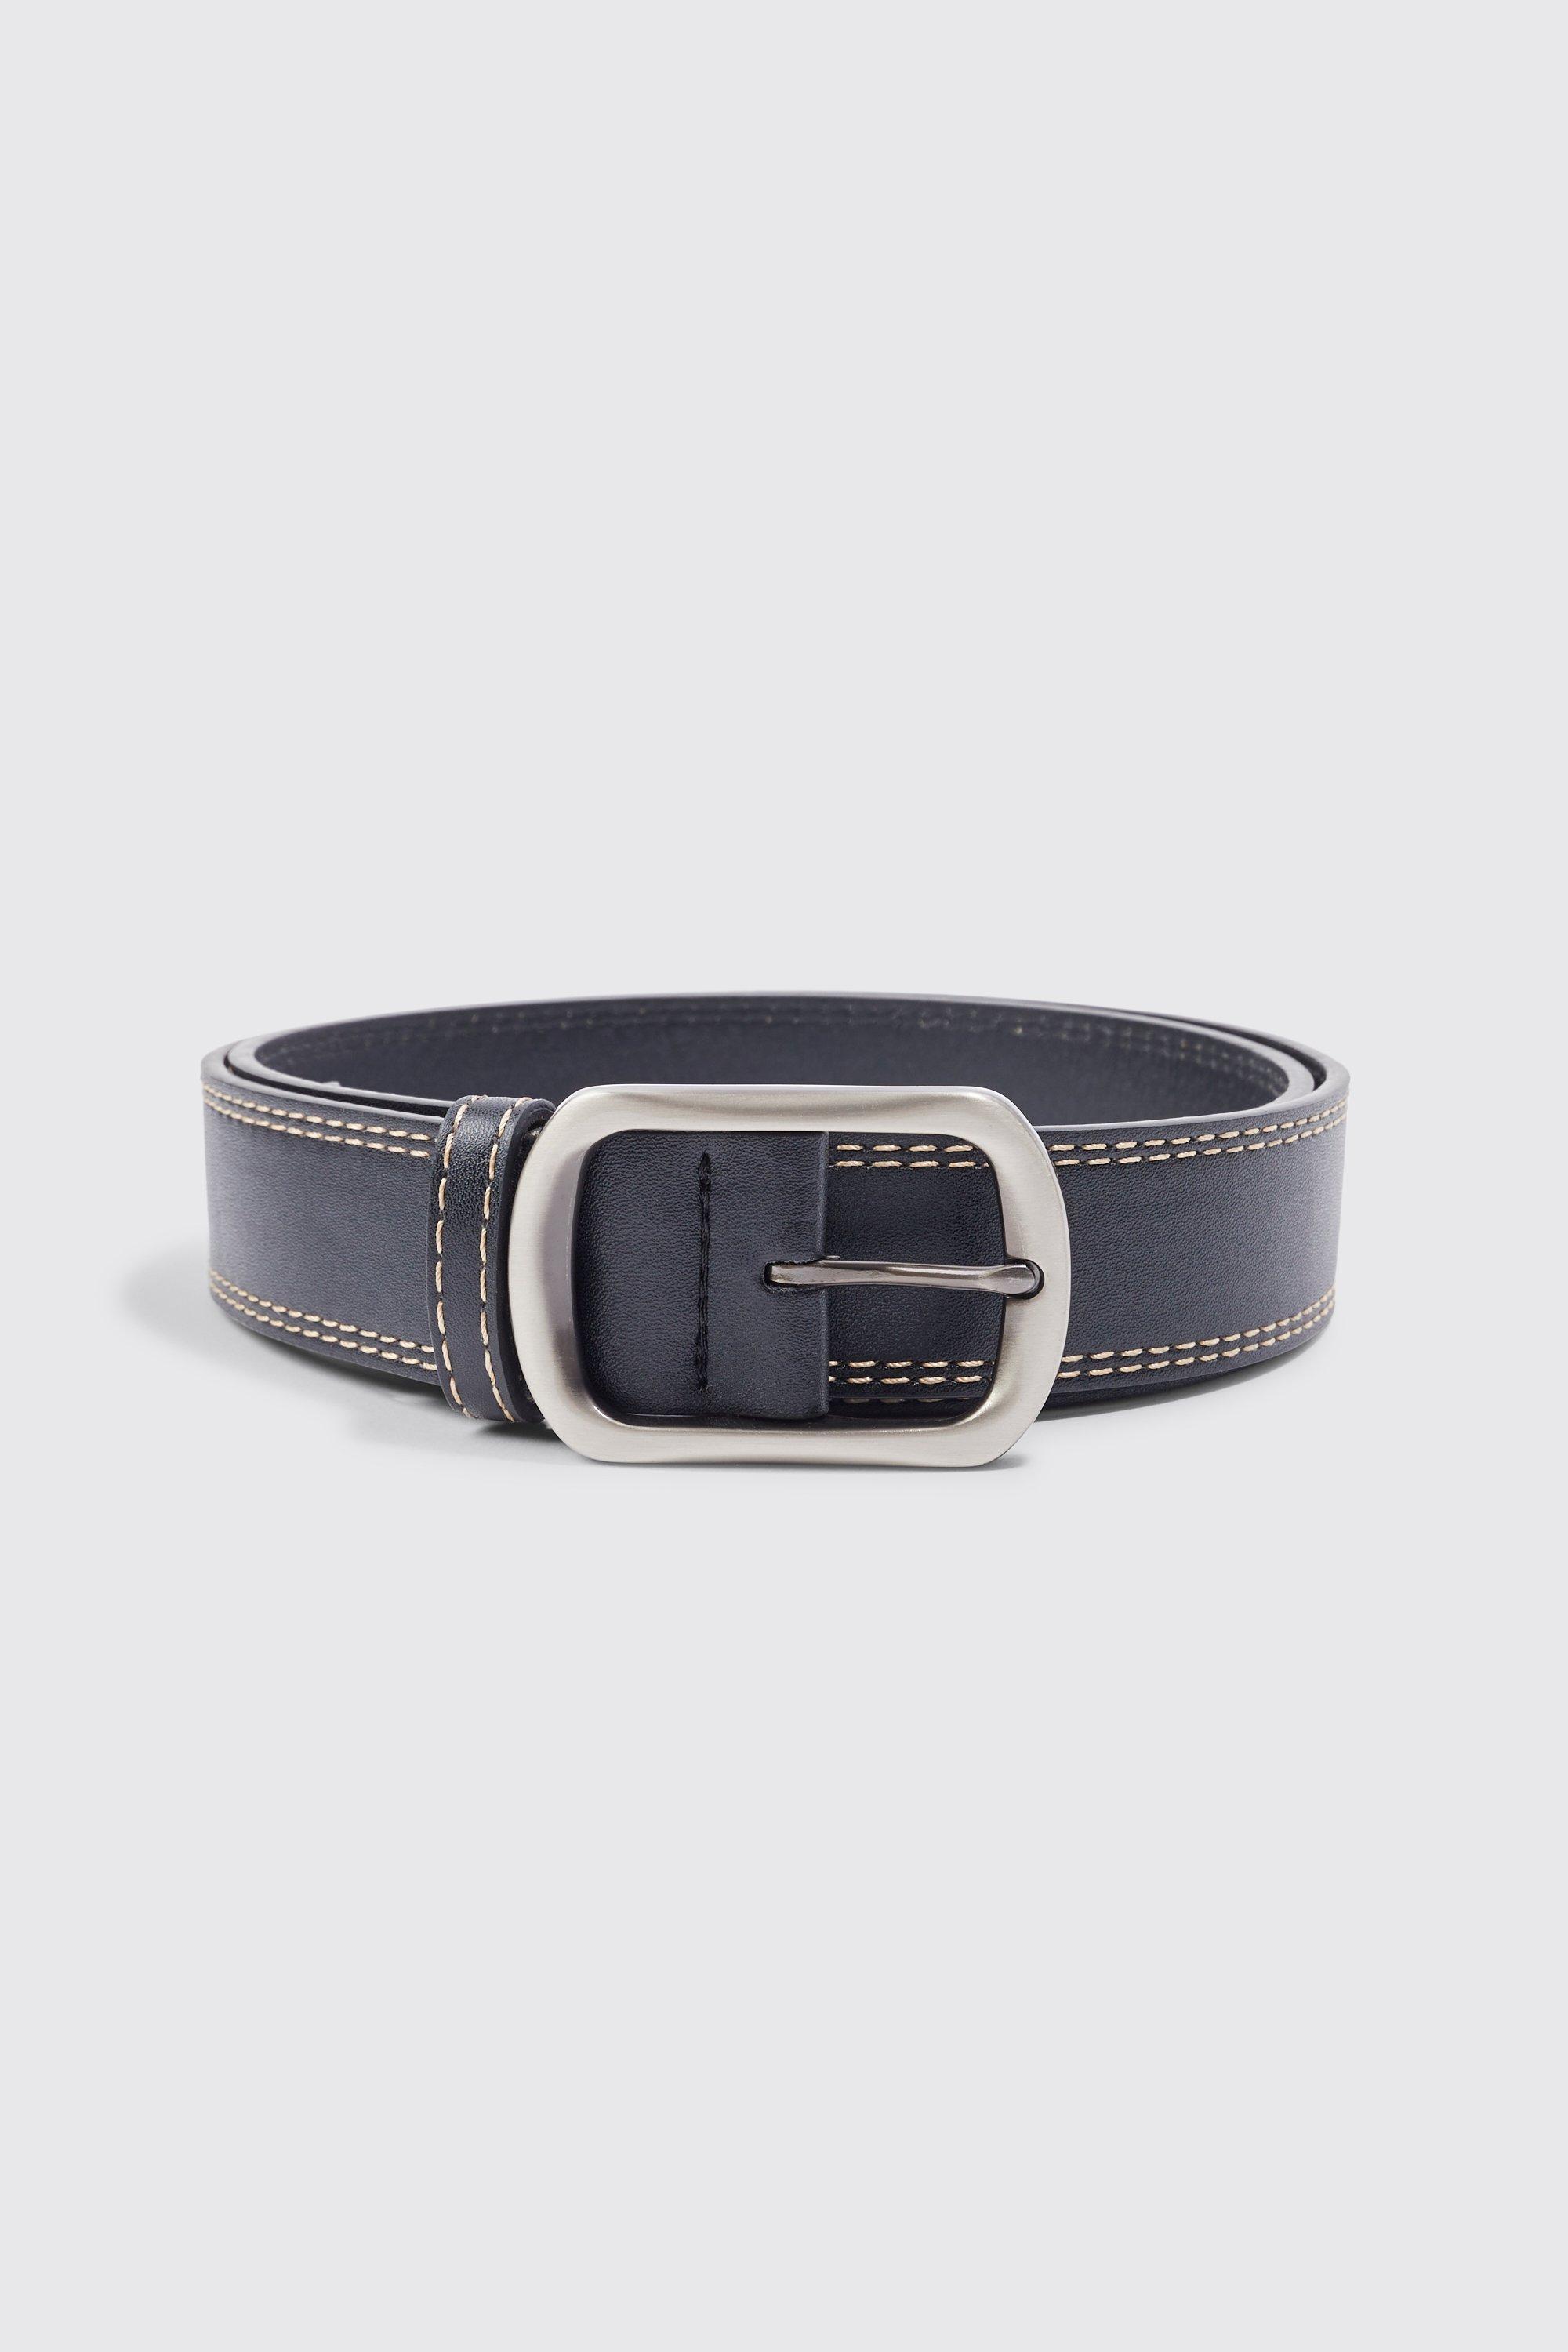 Men's Leather Belts, Buckle & Studded Belts